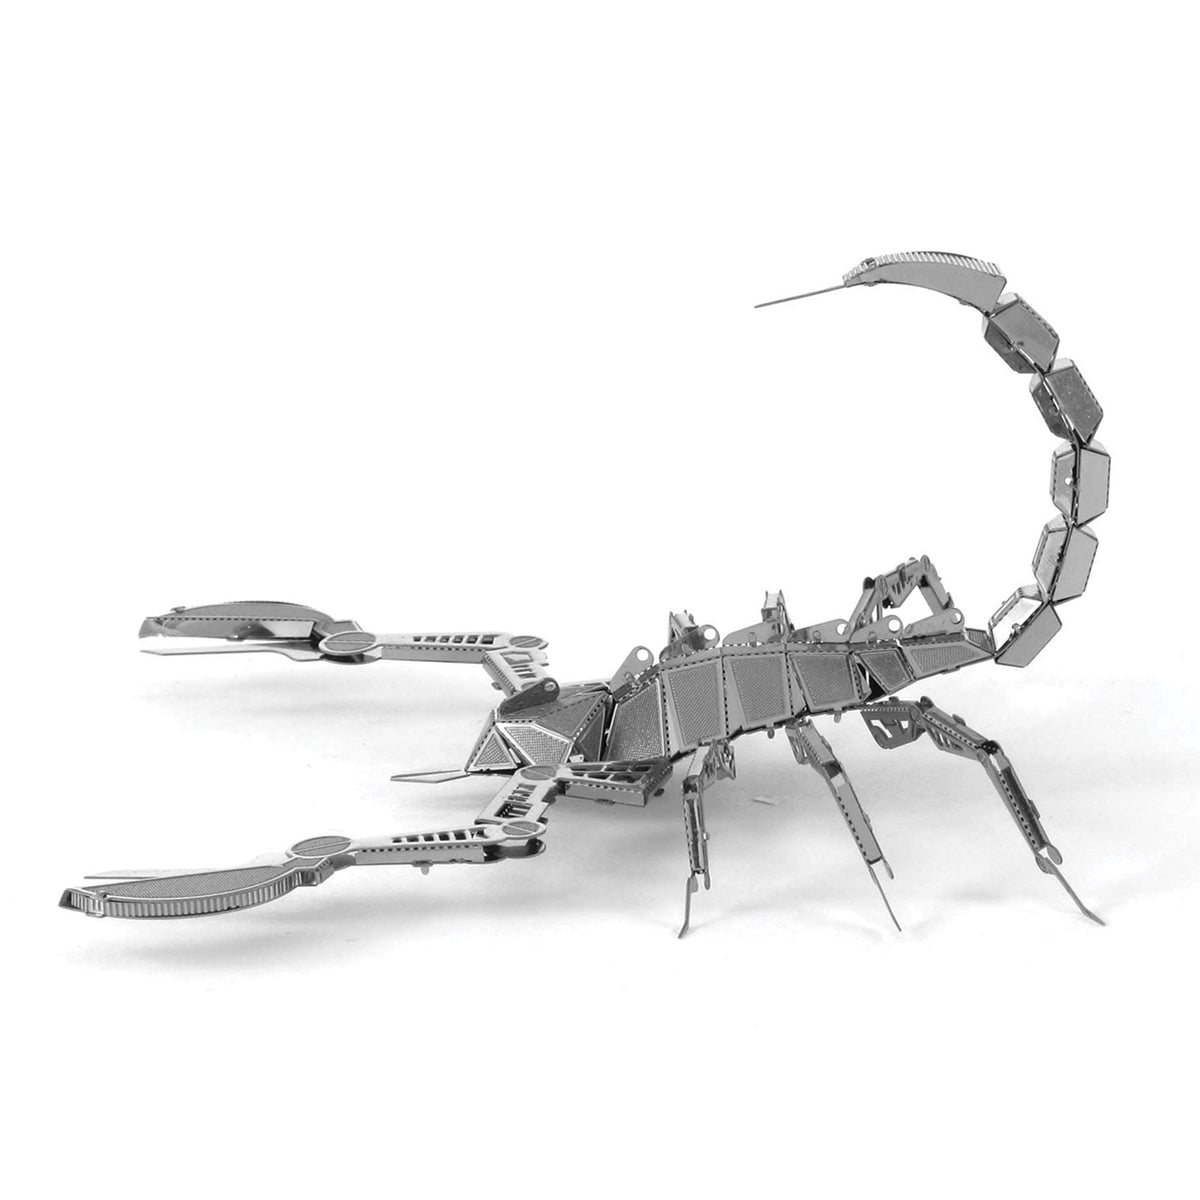 Fascinations MMS070 Metal Earth Scorpion 3D Model Kit, Silver